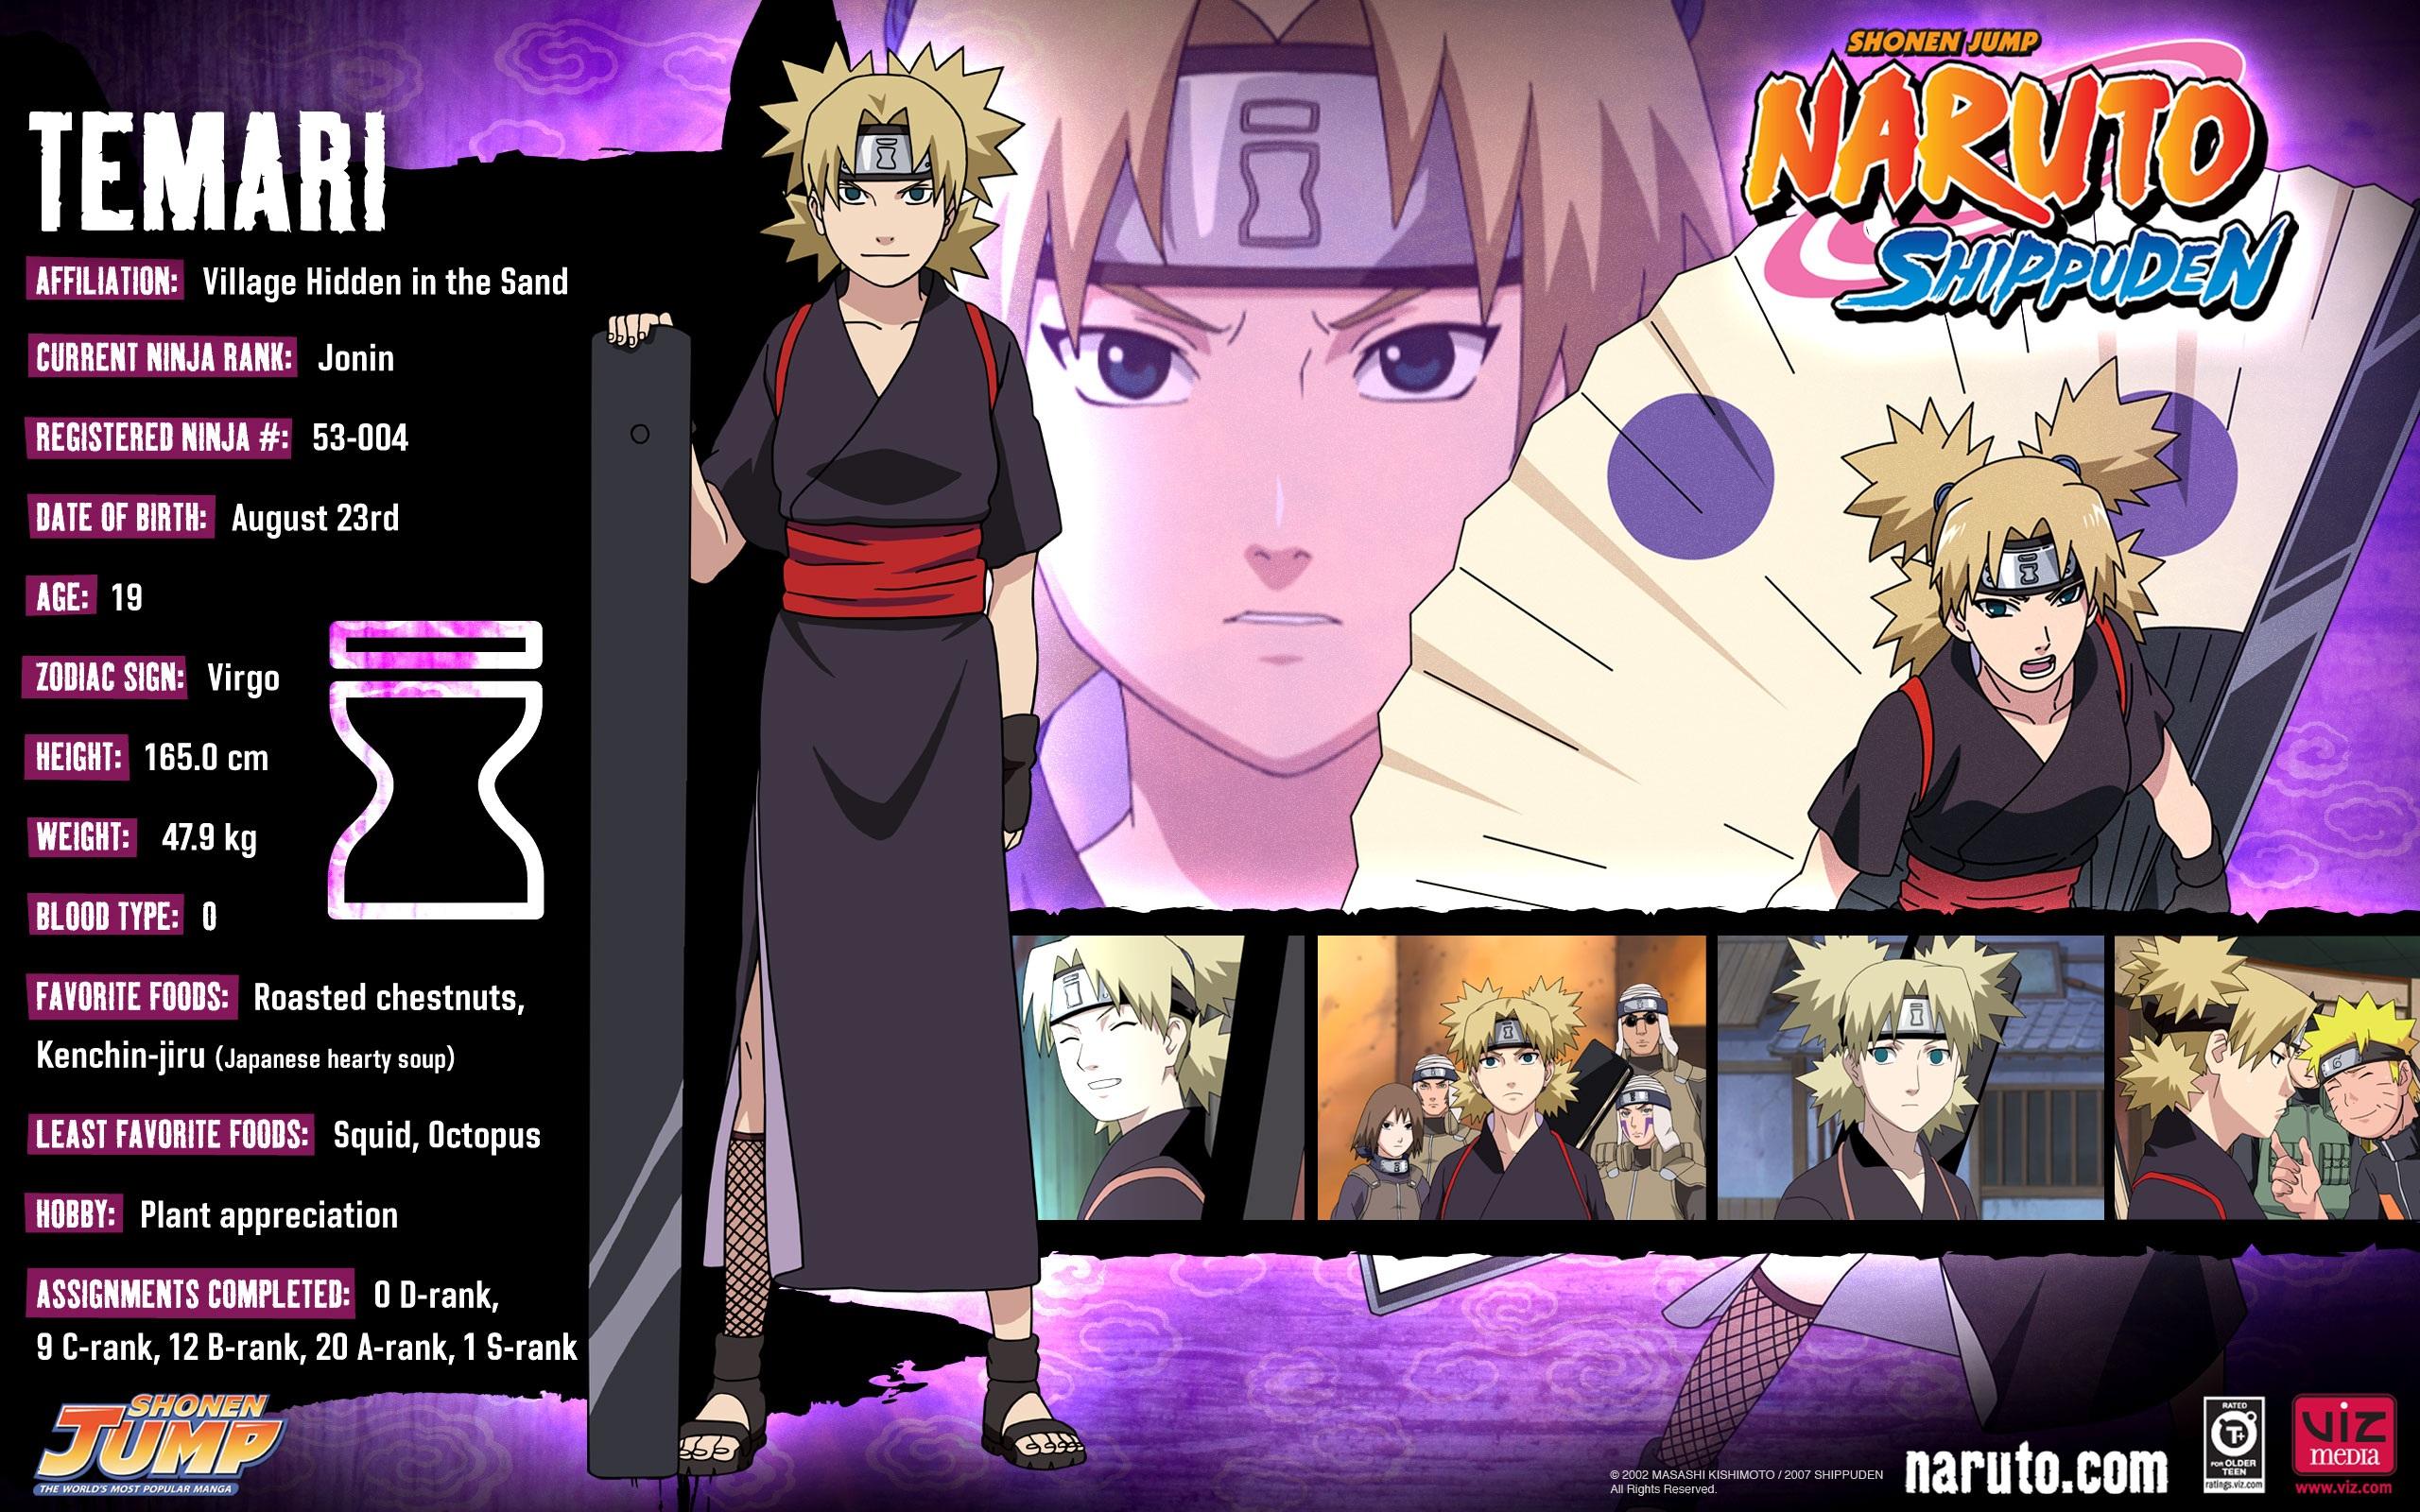 Wallpaper Anime Jepang - Temari Naruto , HD Wallpaper & Backgrounds